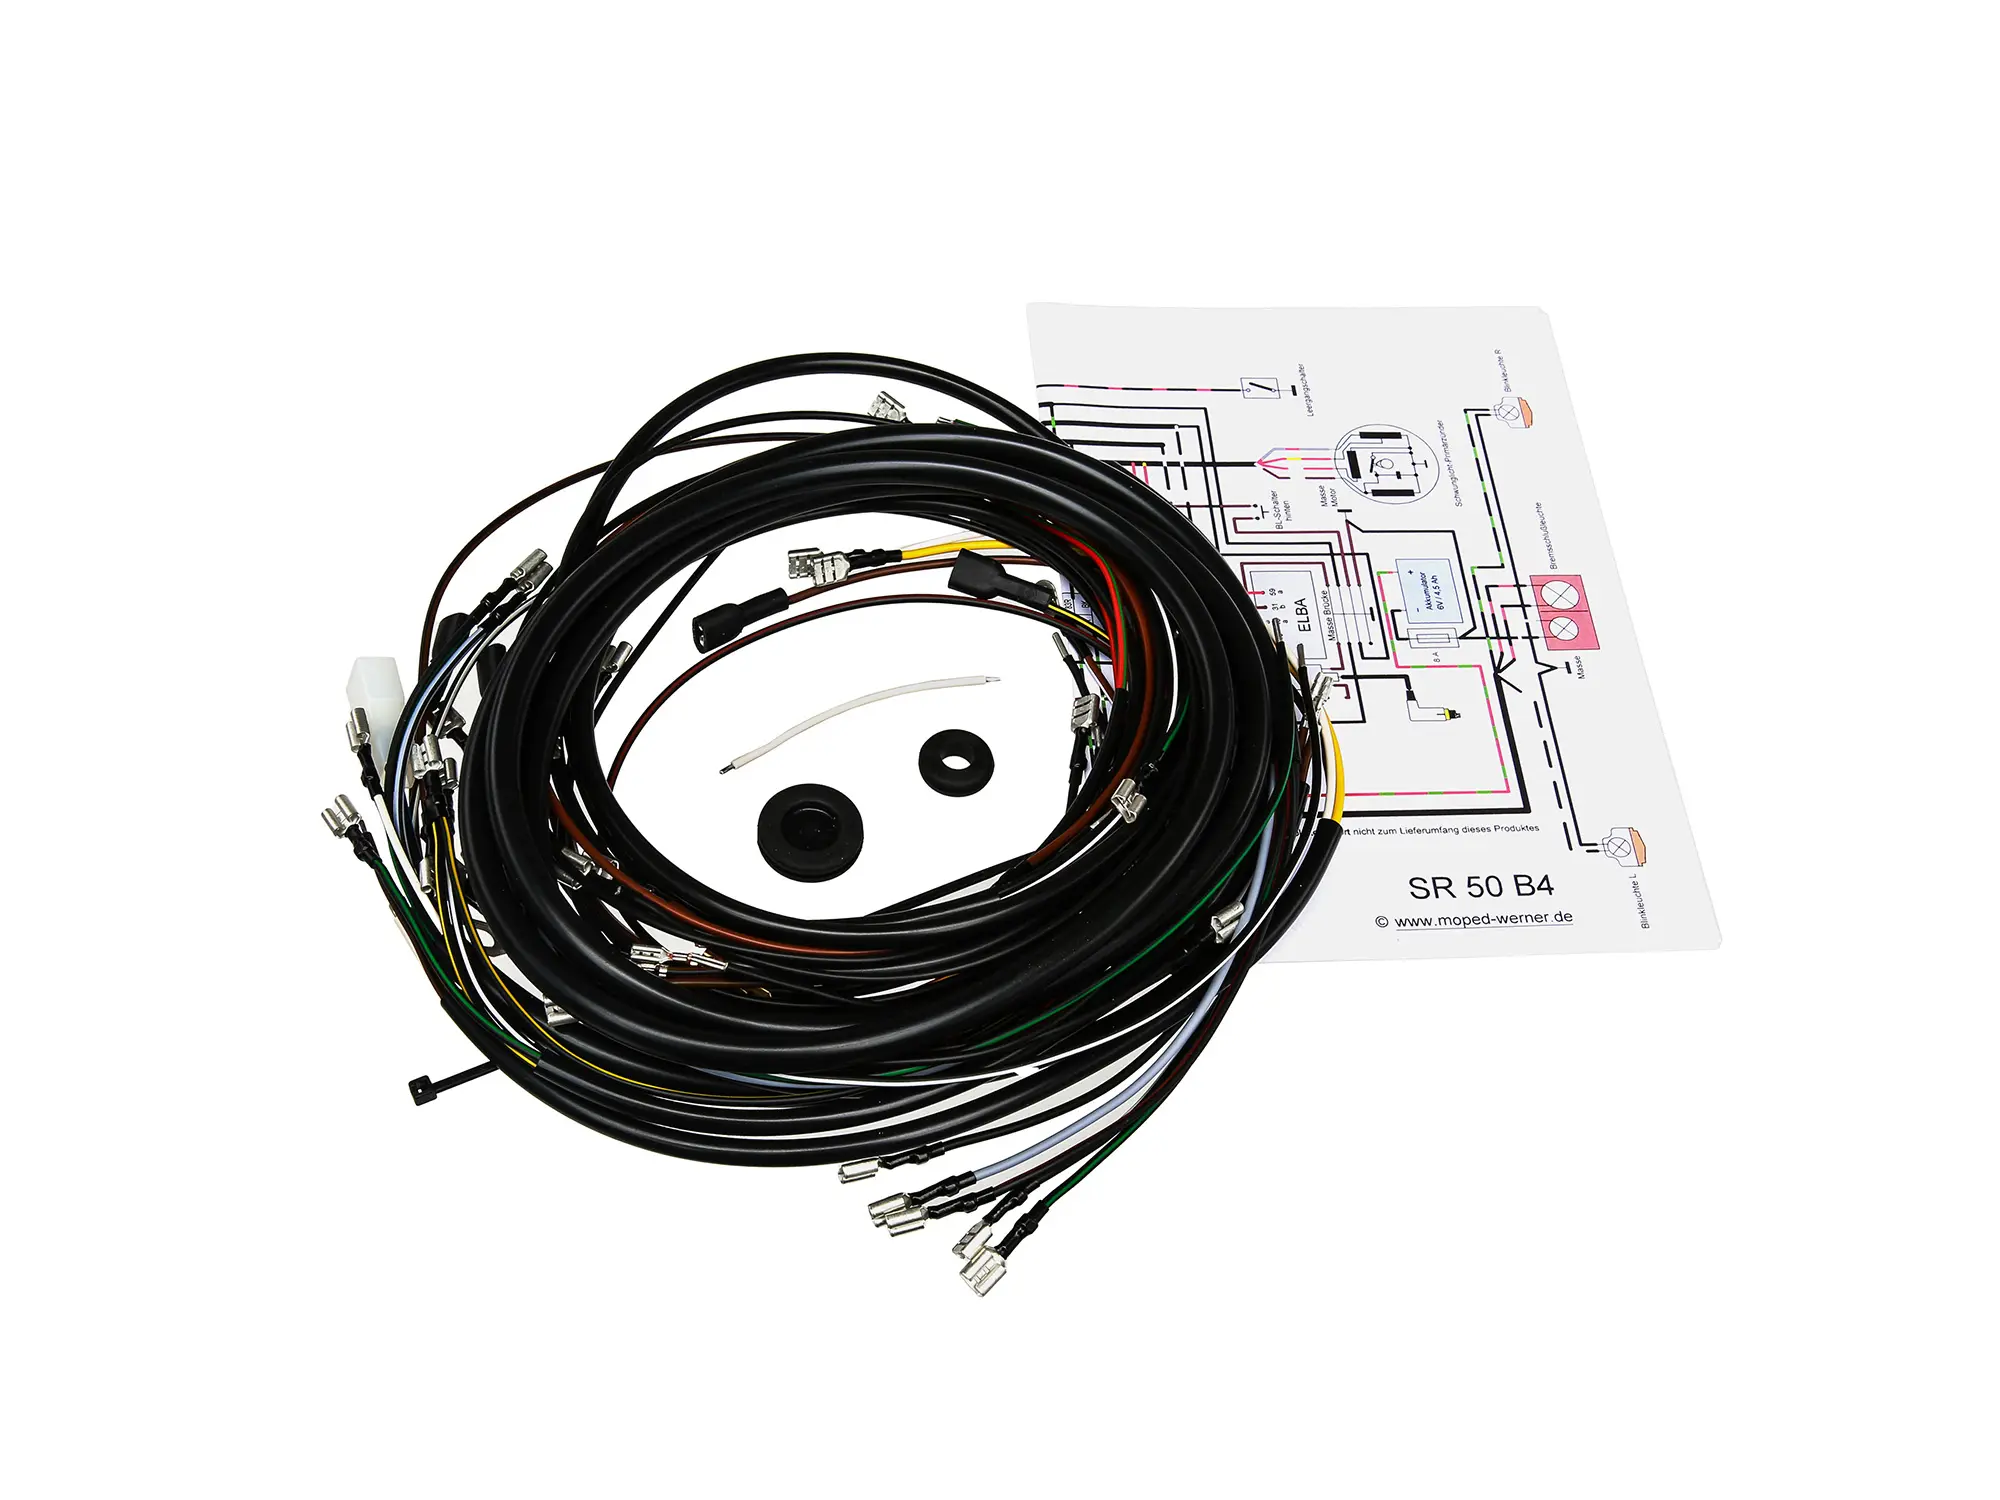 Wiring harness set SR50 B4, 6V interrupter ignition with wiring diagram, Item no: 10013523 - Image 1